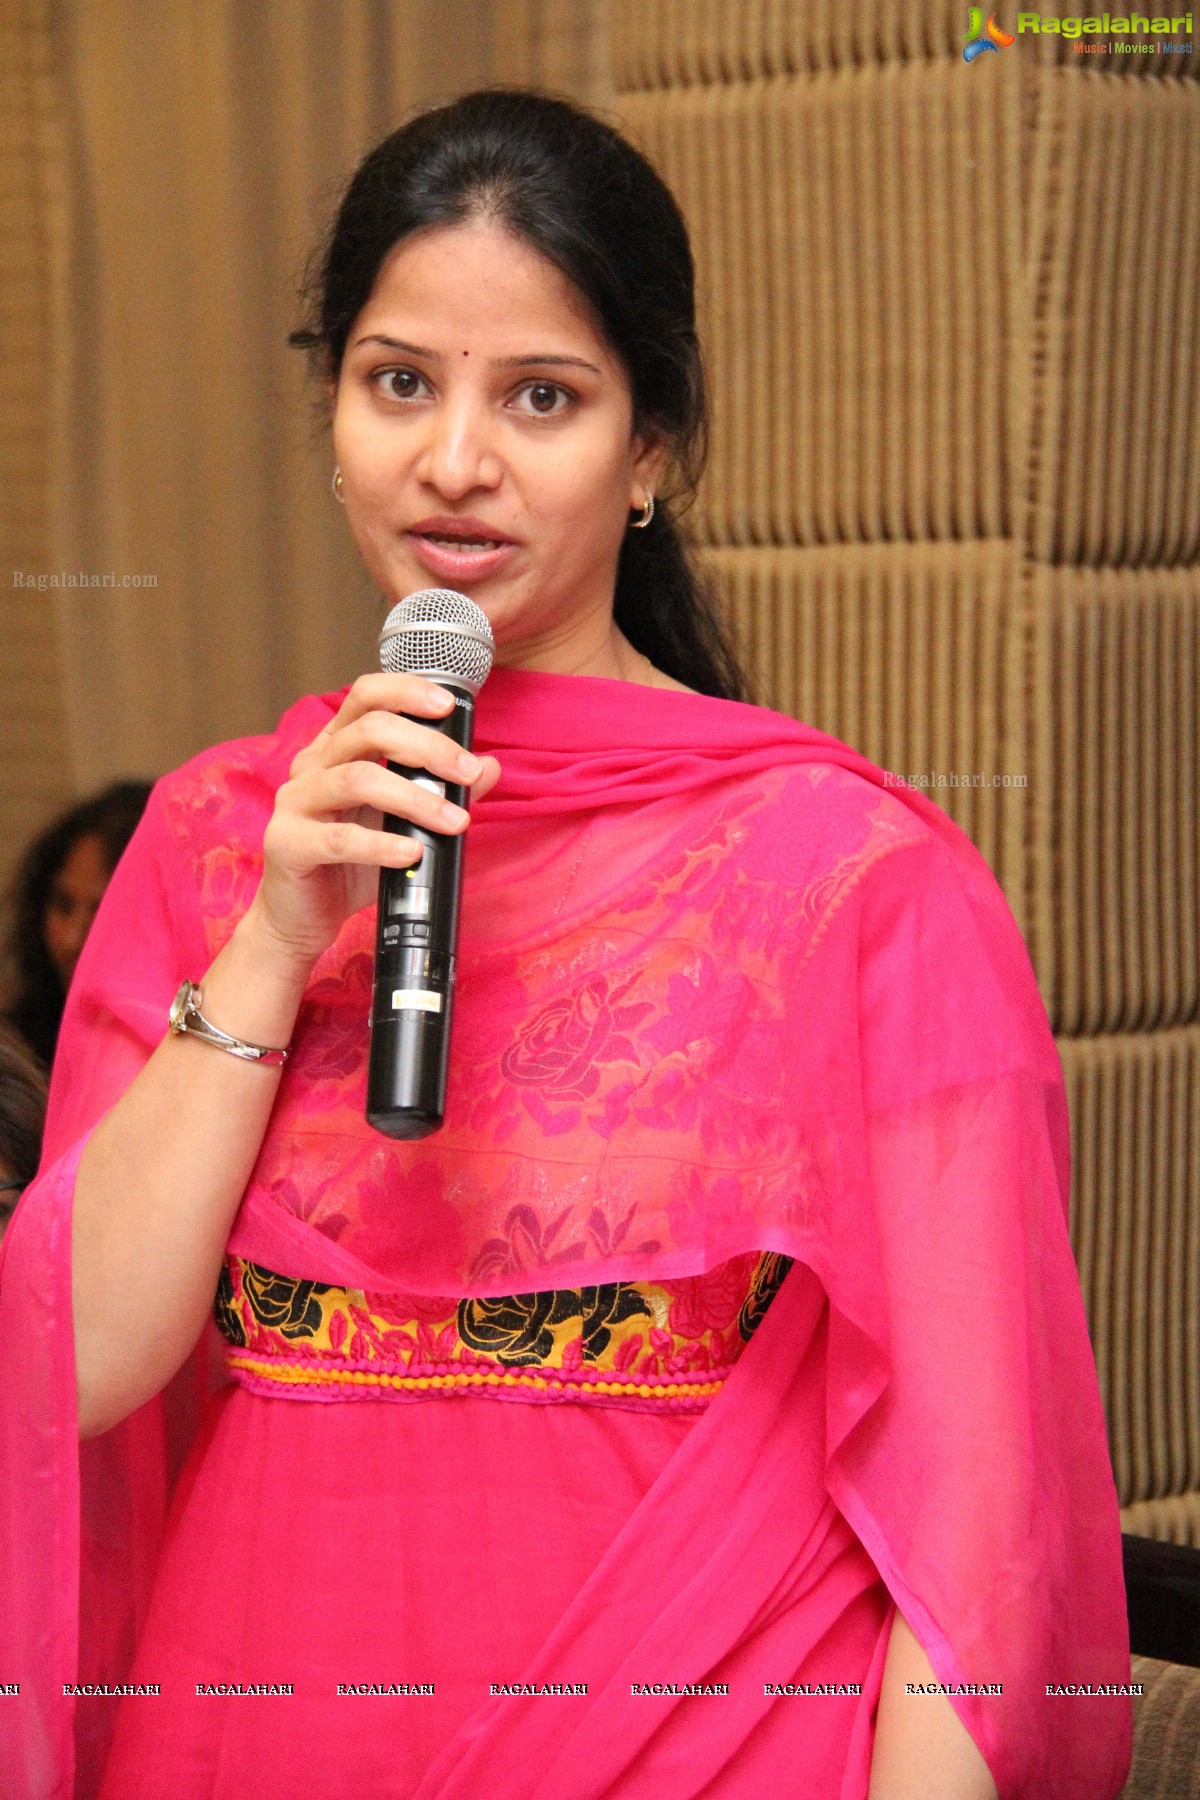 BNI Kohinoor Meet (July 2014) at Fortune Park Vallabha, Hyderabad